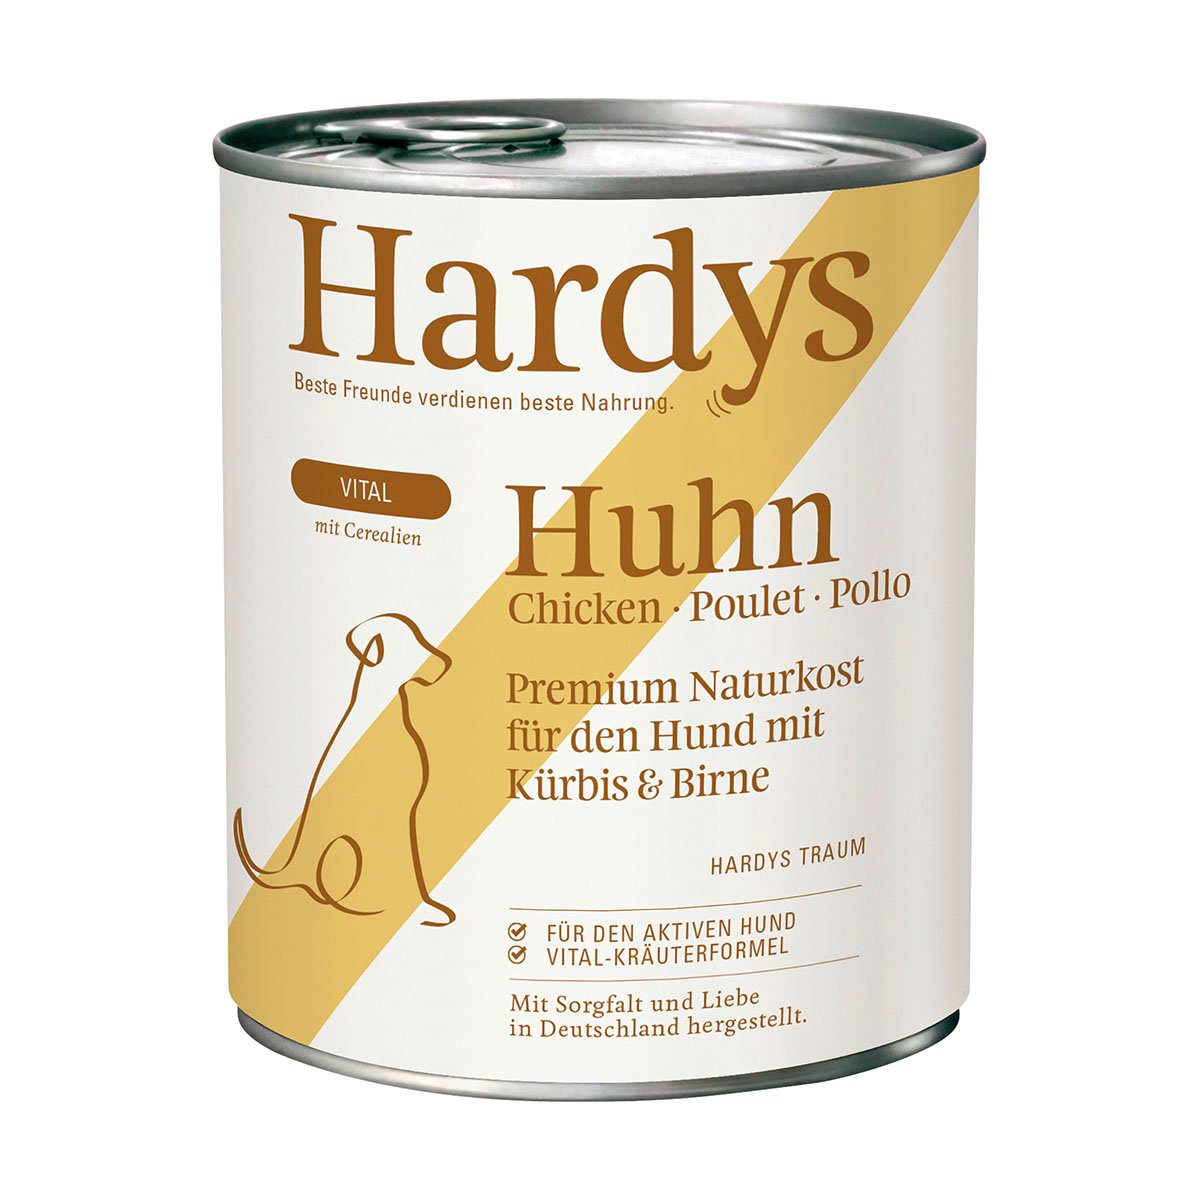 Hardys VITAL Huhn mit Kürbis & Birne 12x800g von Hardys